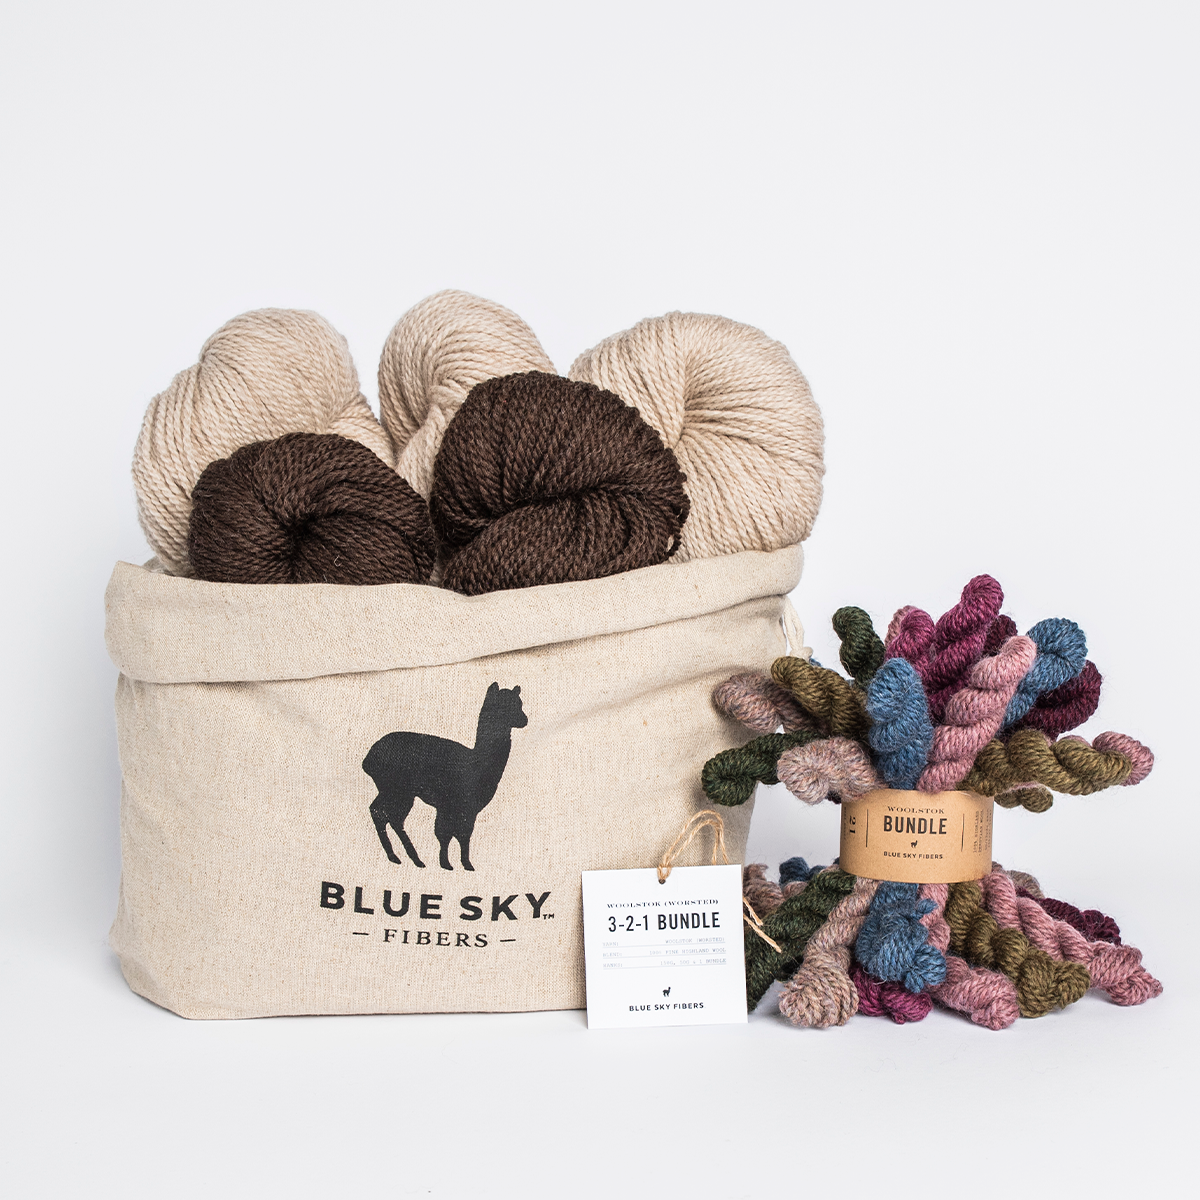 Blue Sky Fibers 3-2-1 Woolstok yarn (Worsted) Bundle color bramble and fig